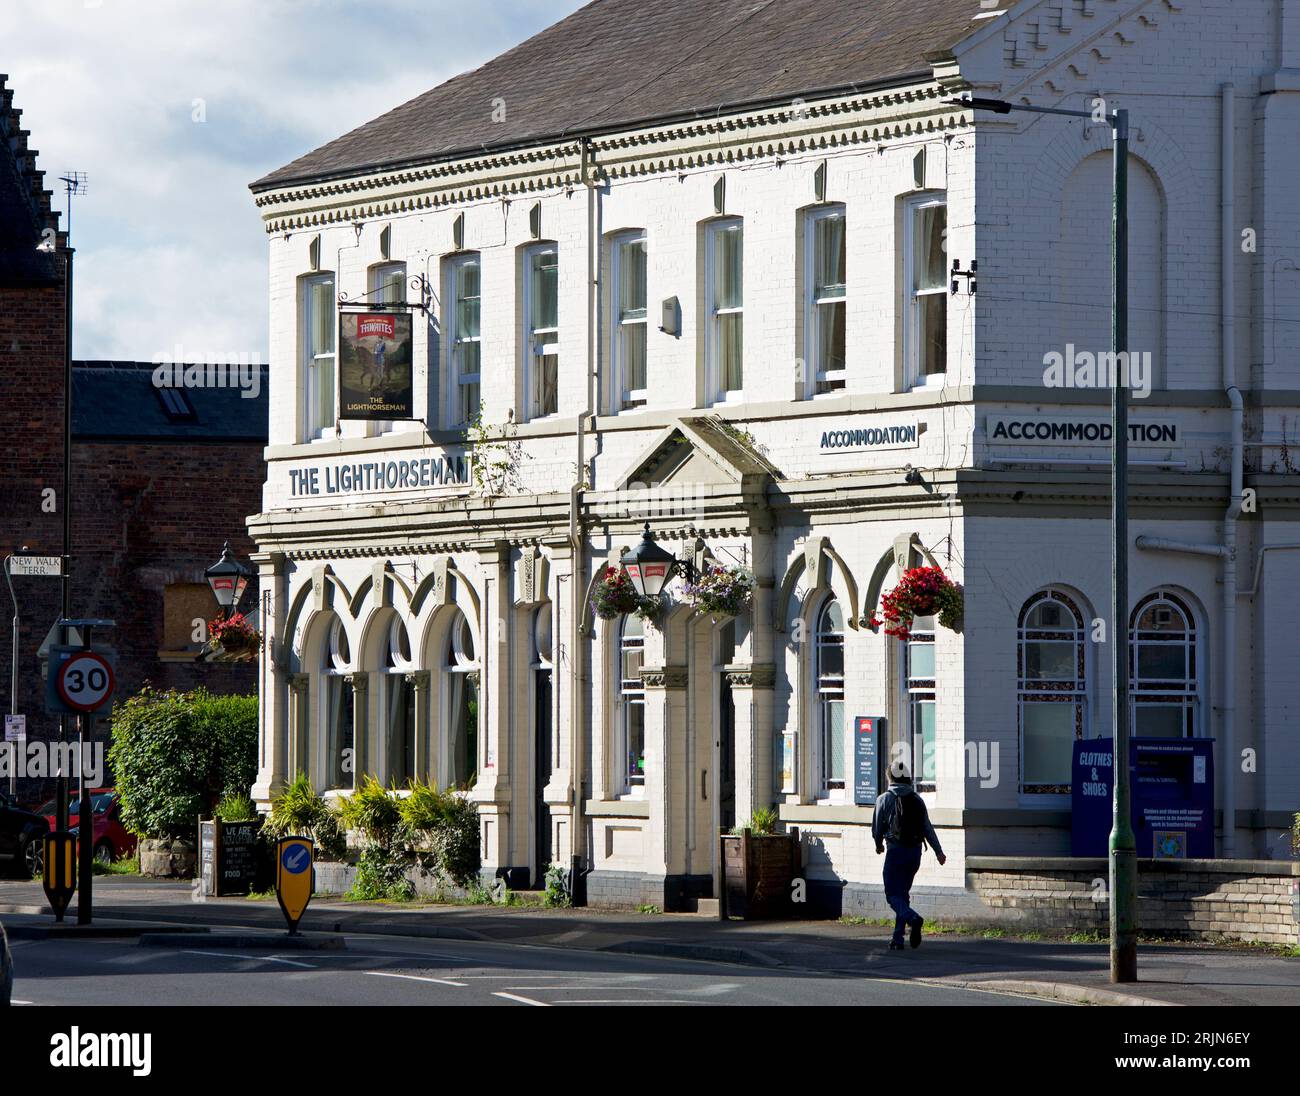 The Lighthorseman pub on Fulford Road, York, North Yorkshire, England UK Stock Photo